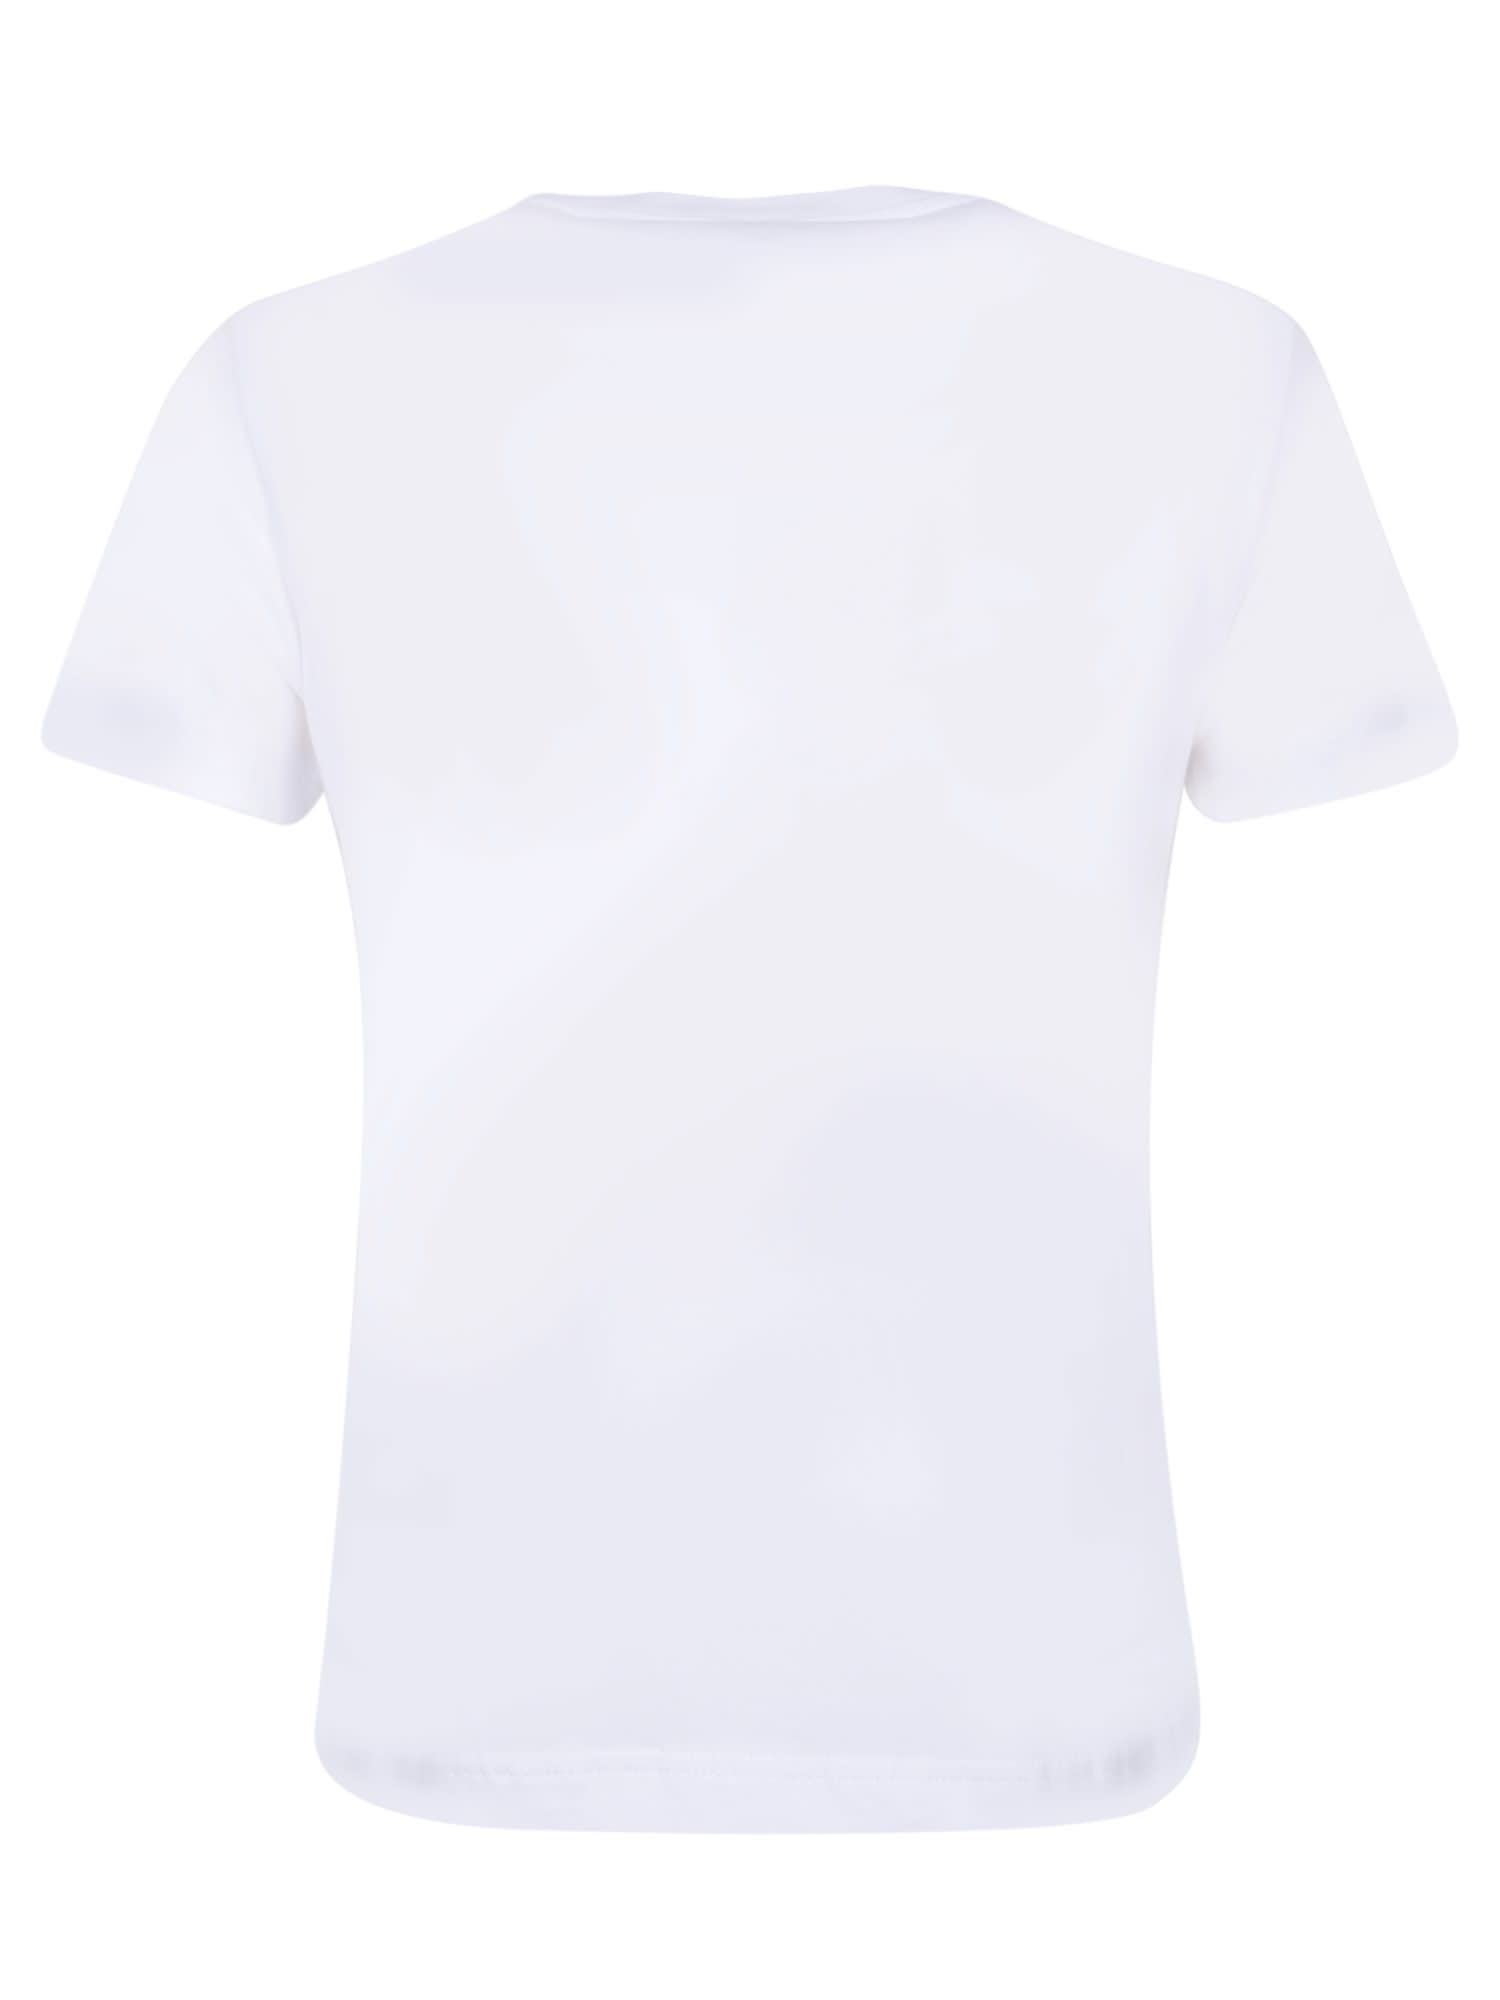 Shop Casablanca Unity Is Power White T-shirt